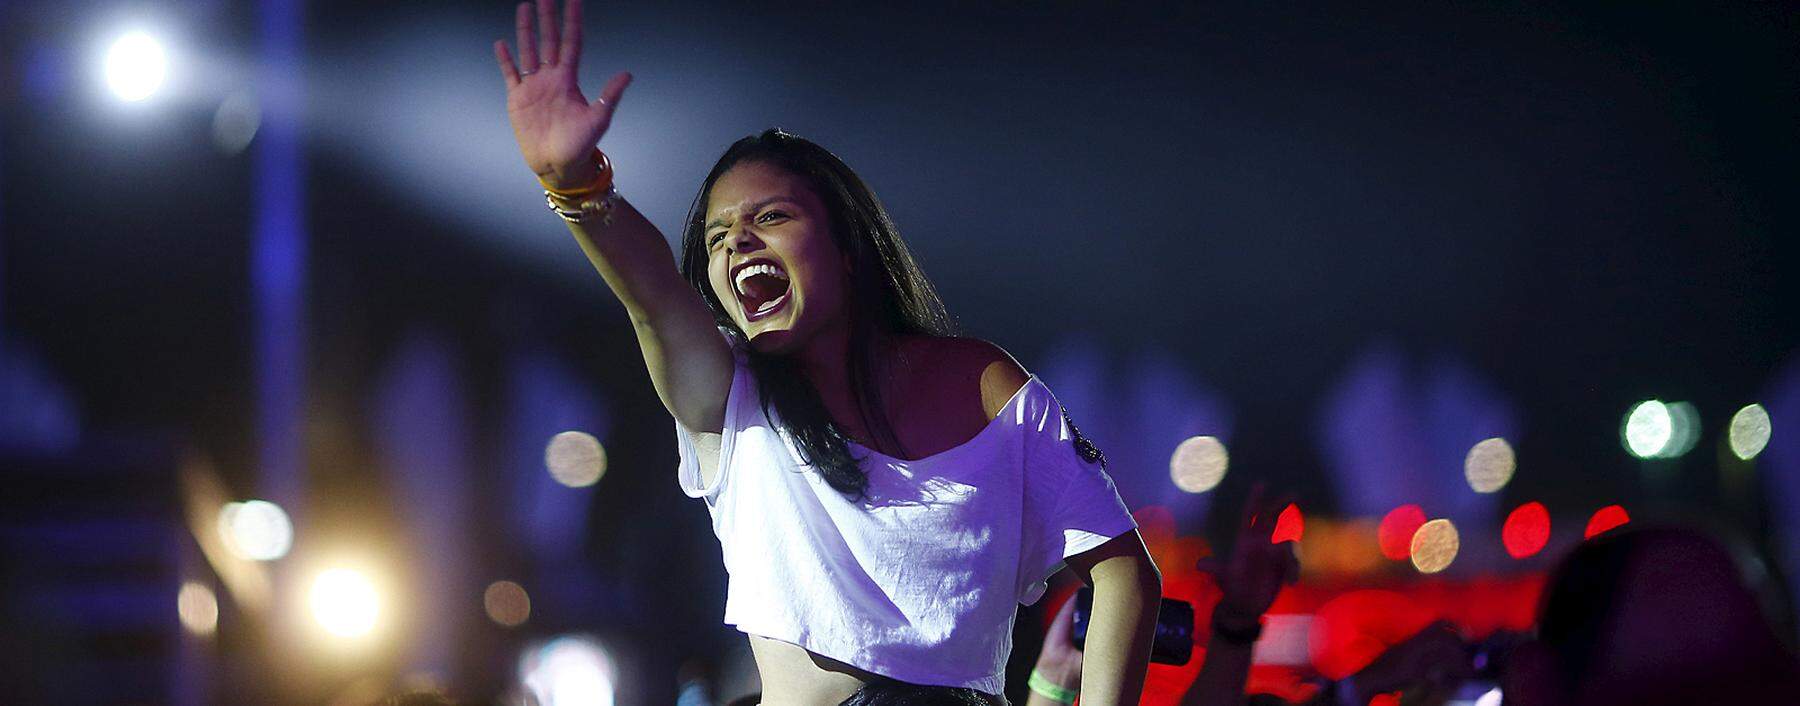 Rock fans cheer during a concert at the Rock in Rio Music Festival in Rio de Janeiro